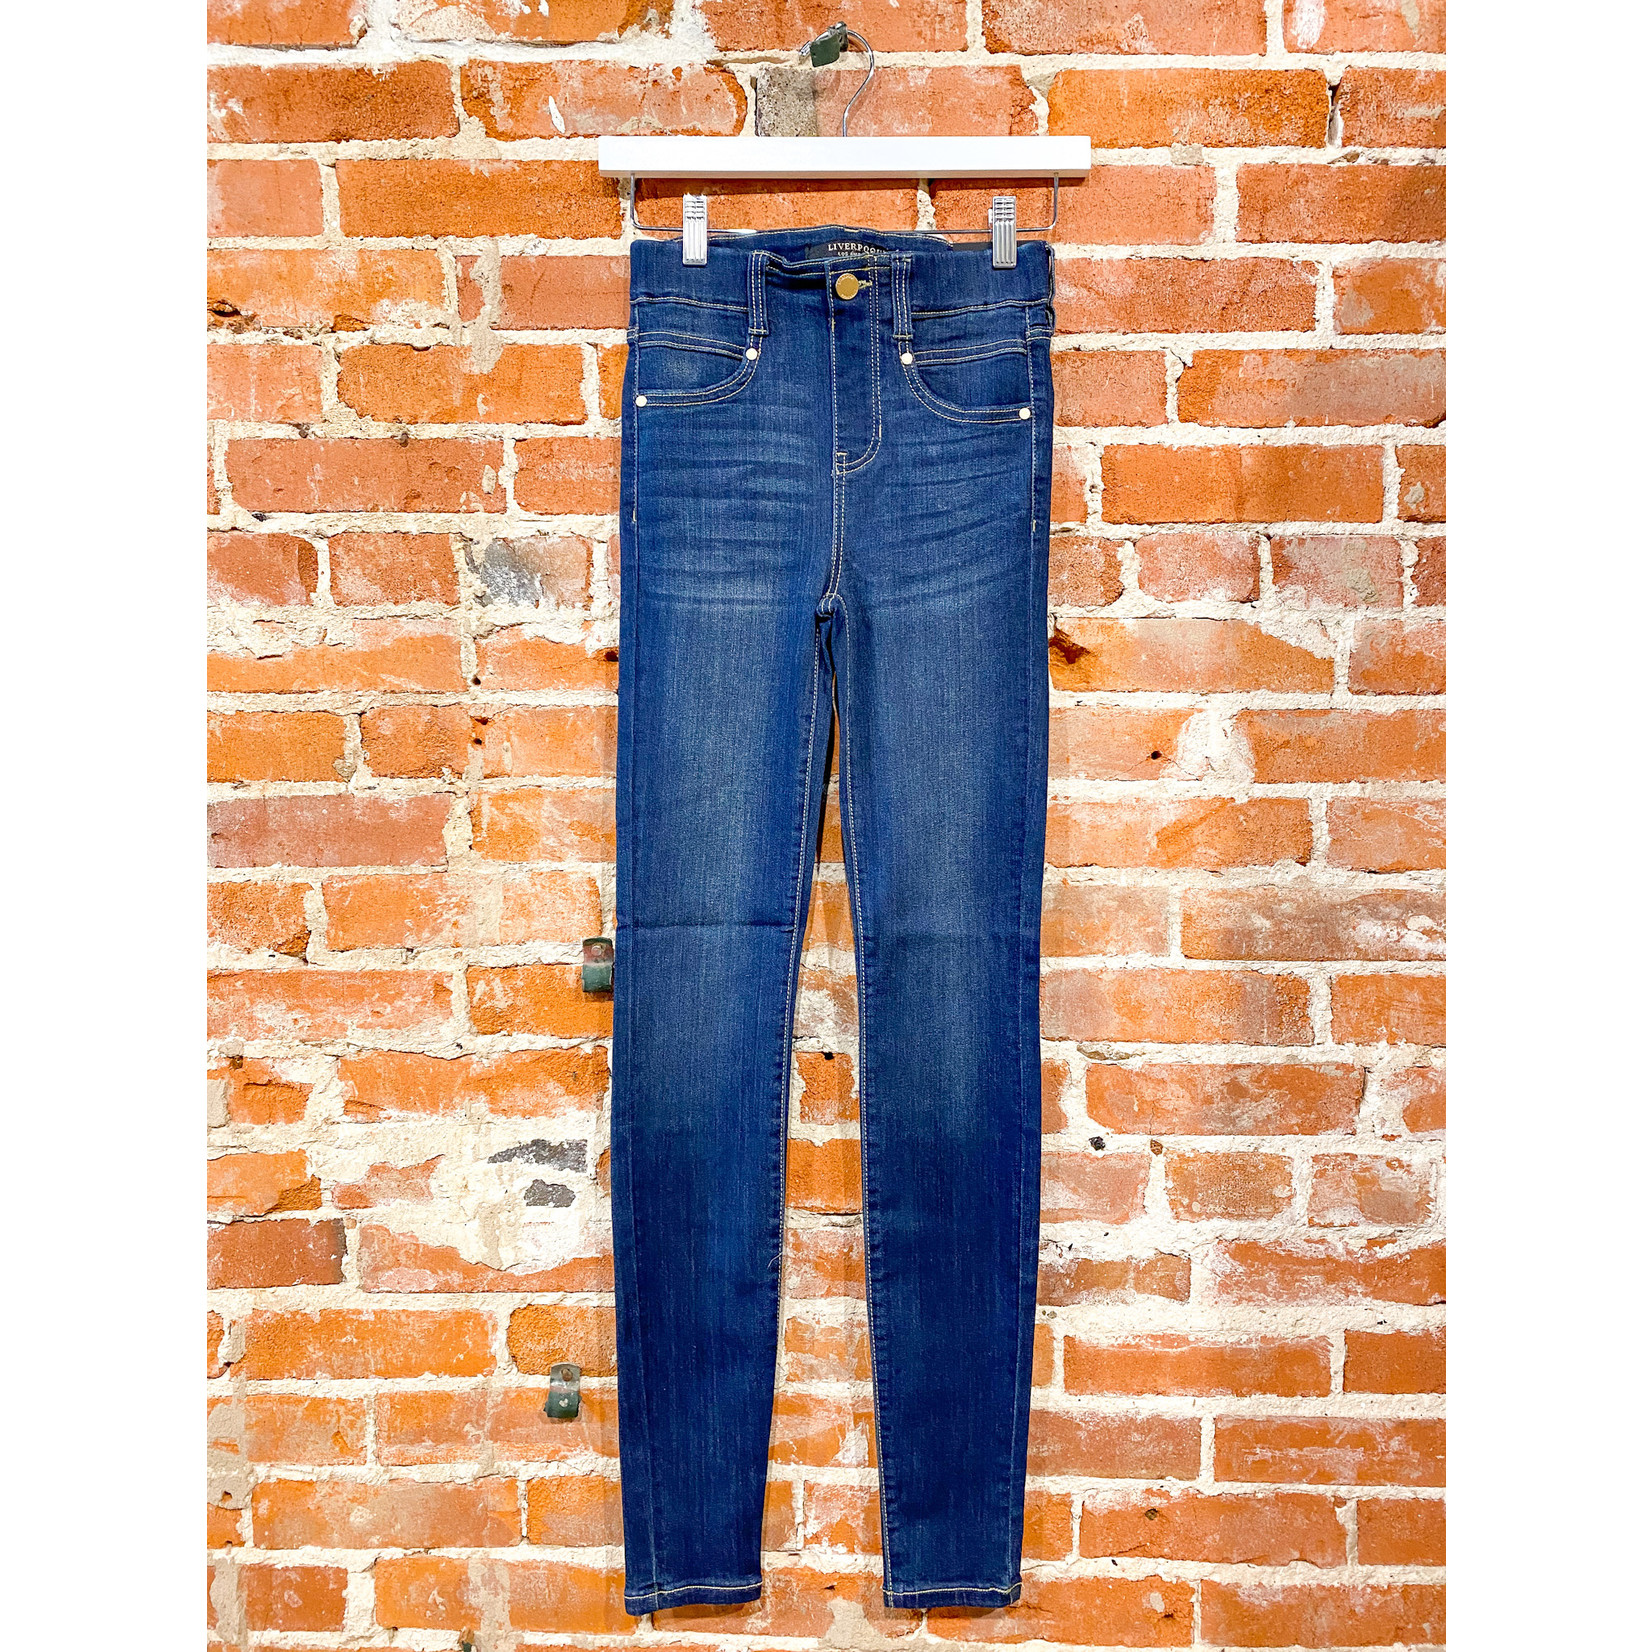 Liverpool Jeans Company Gia Glider Skinny 30"